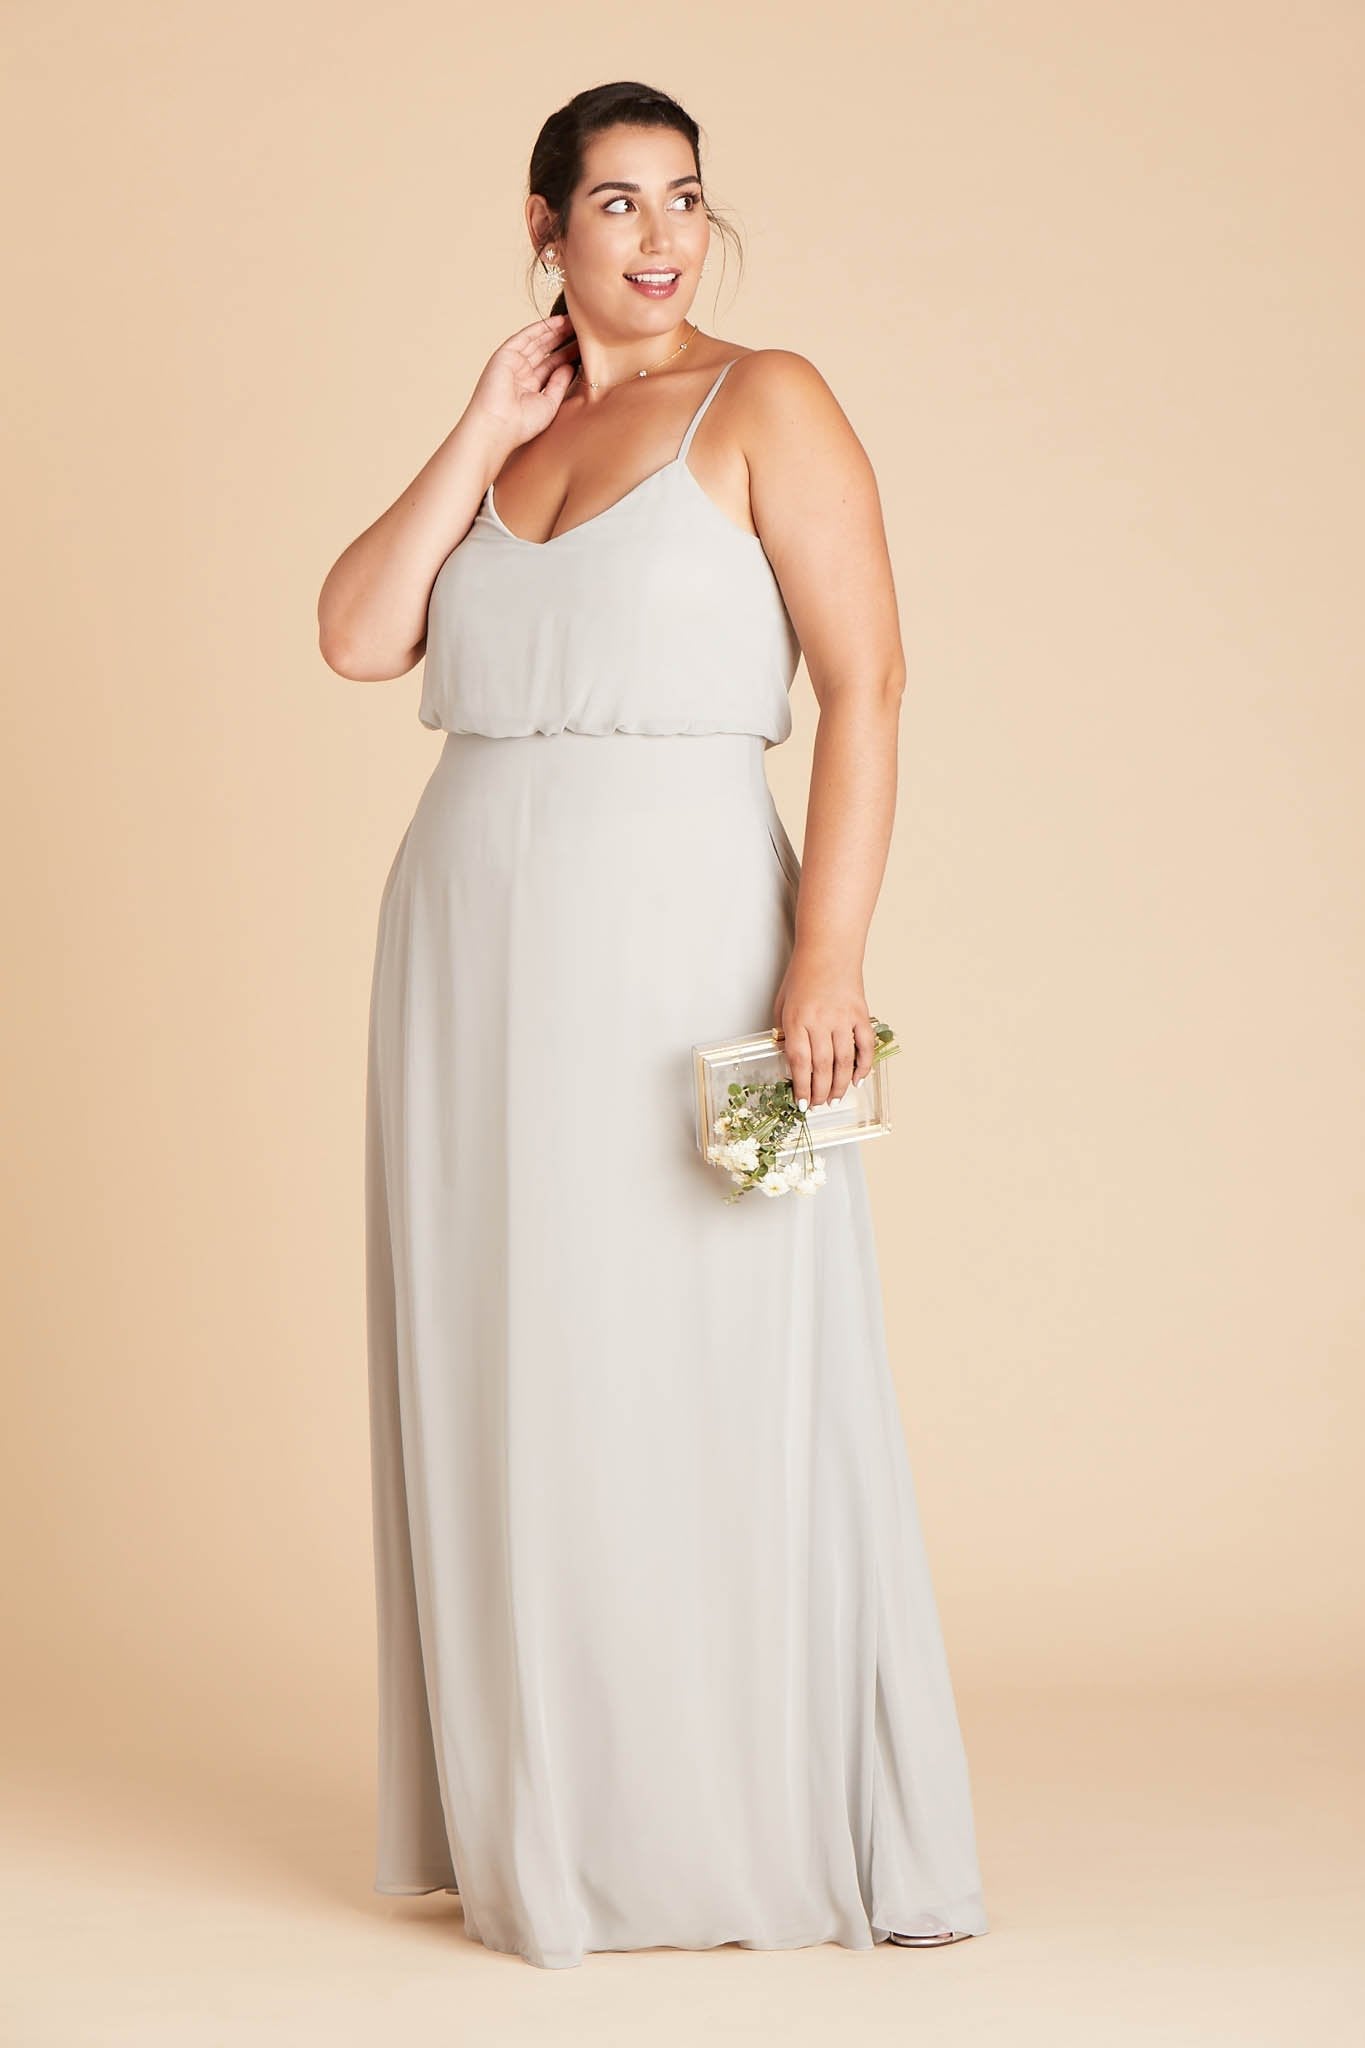 Gwennie plus size bridesmaid dress in dove gray chiffon by Birdy Grey, side view